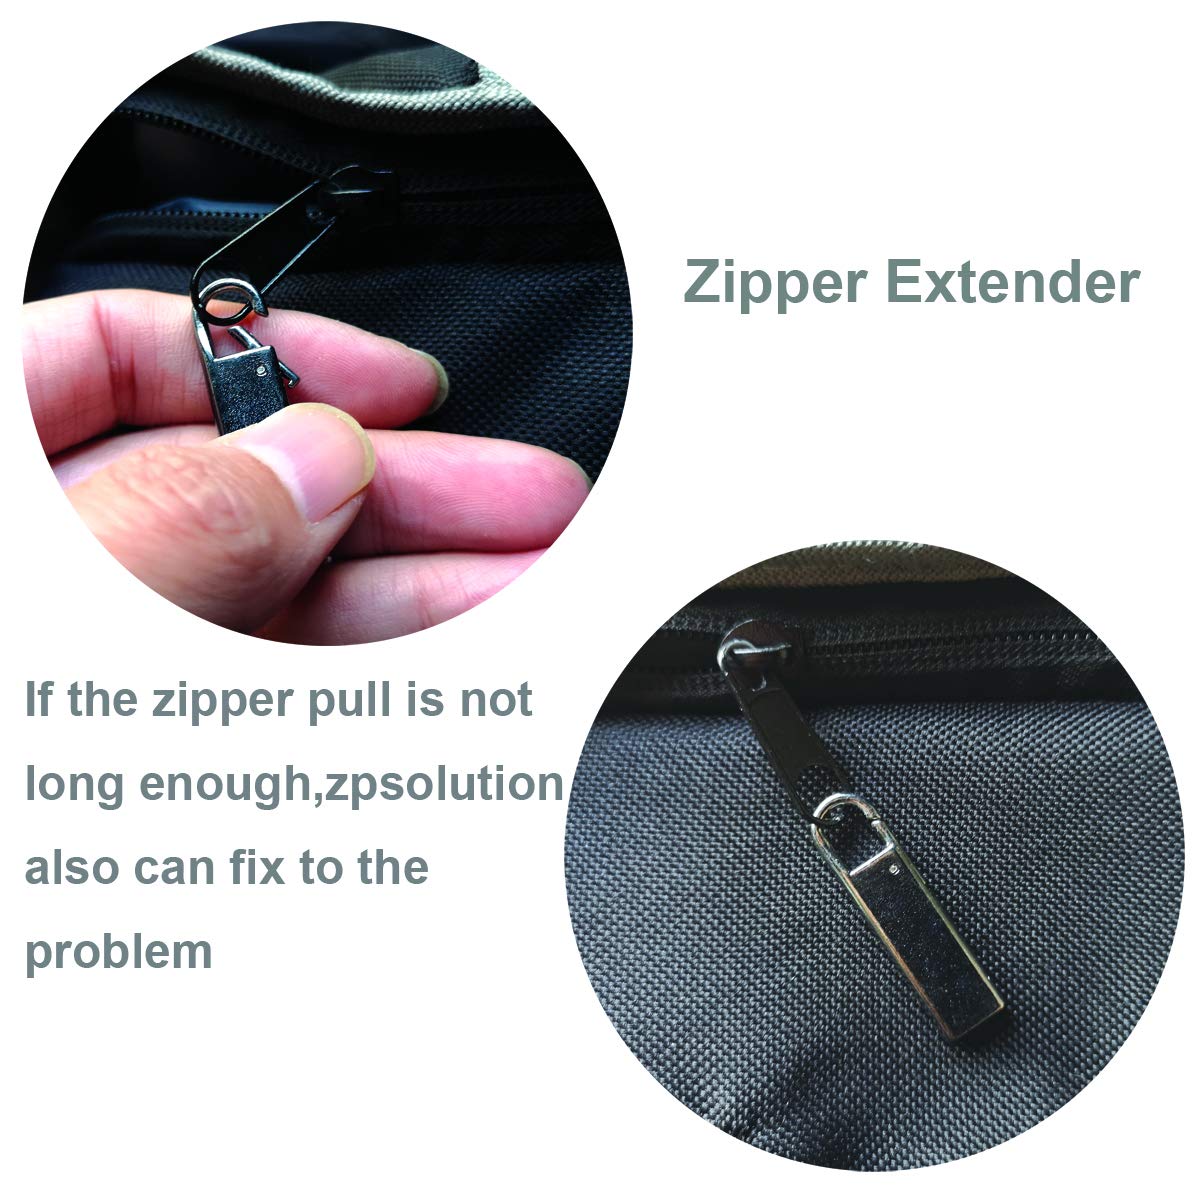 Zipper MEND Pull Tab Replacement Quick Click